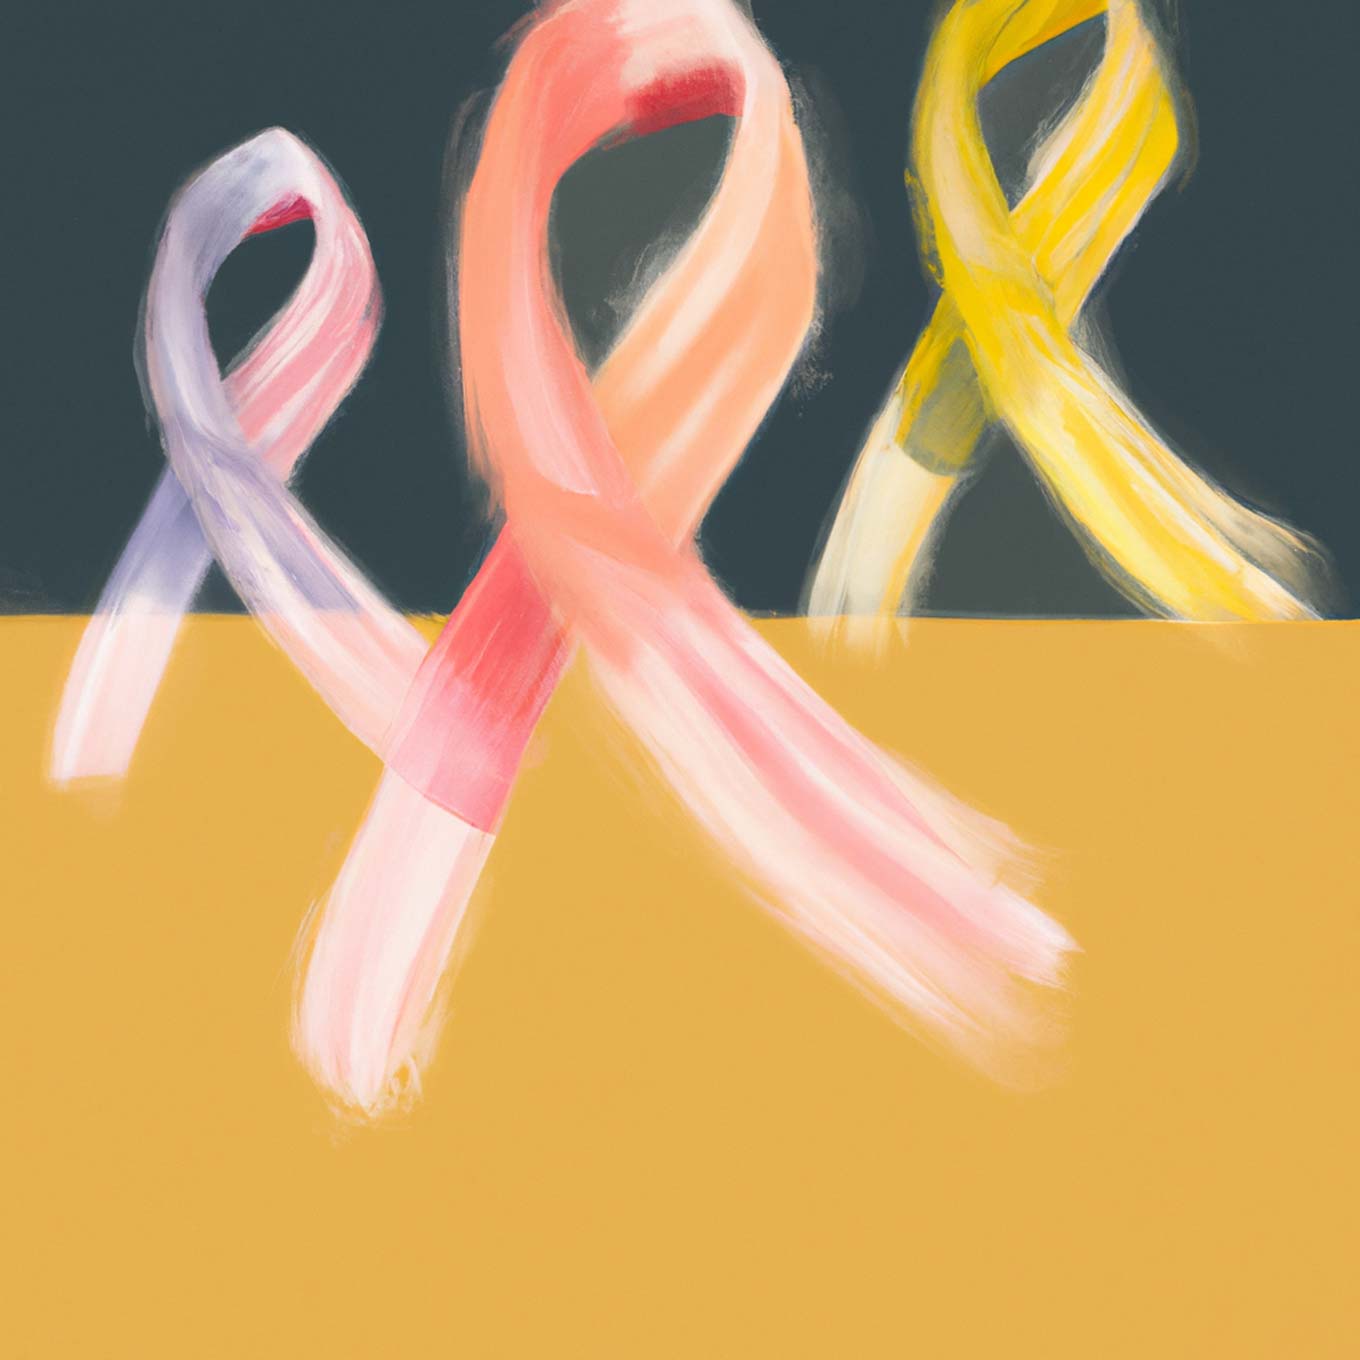 Purple, pink, orange, and yellow awareness ribbons